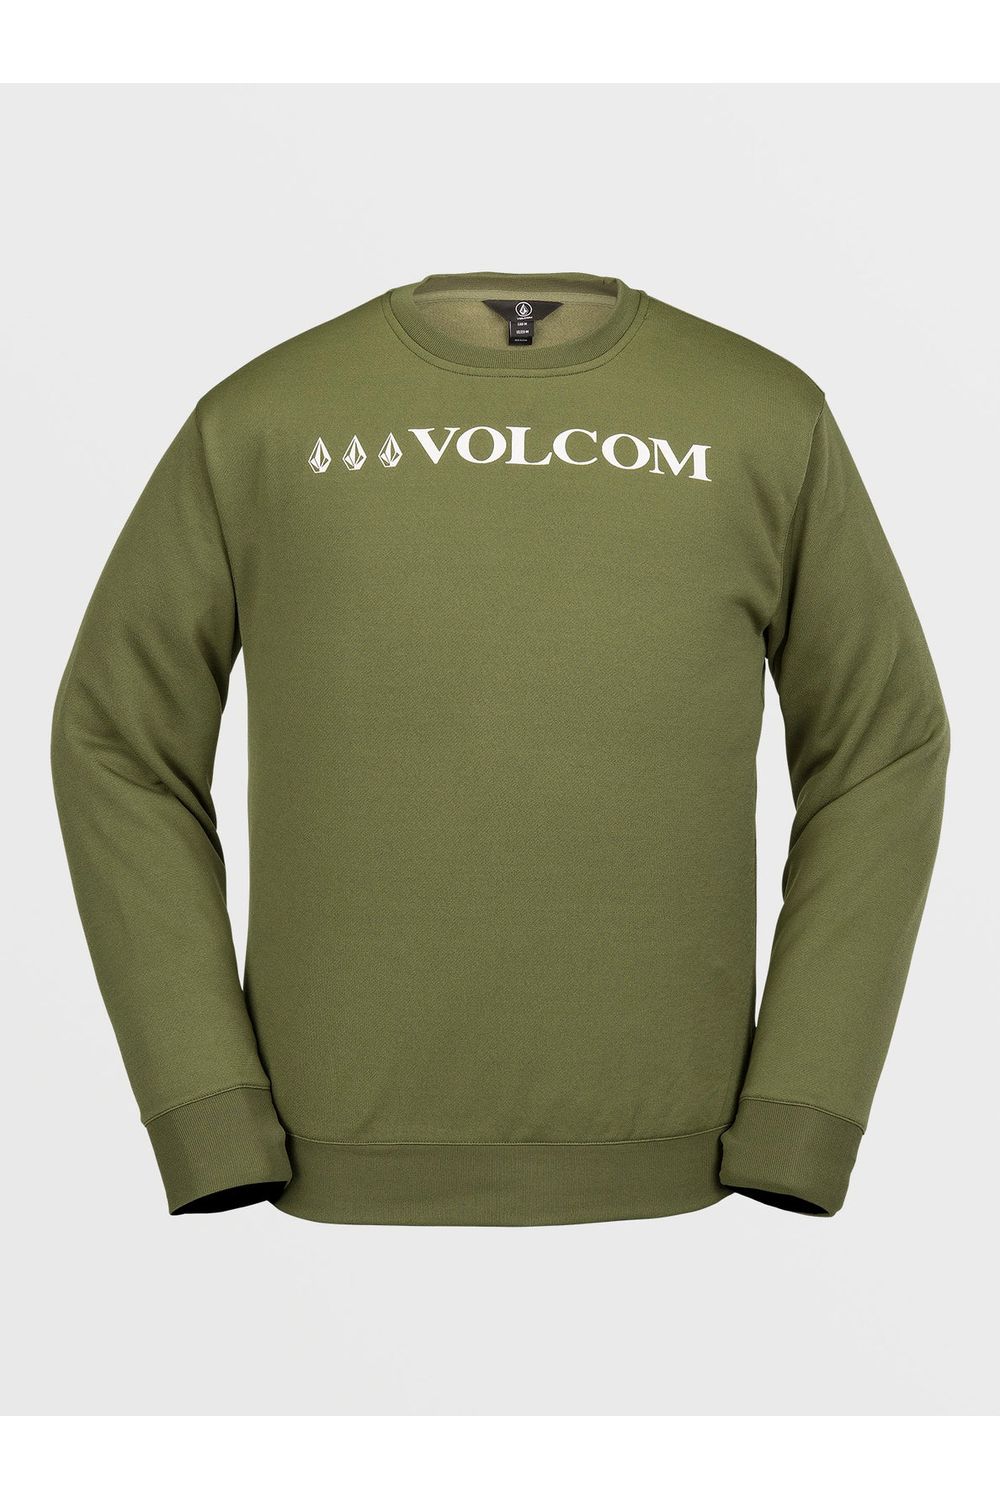 Volcom Core Hydro Crew Military